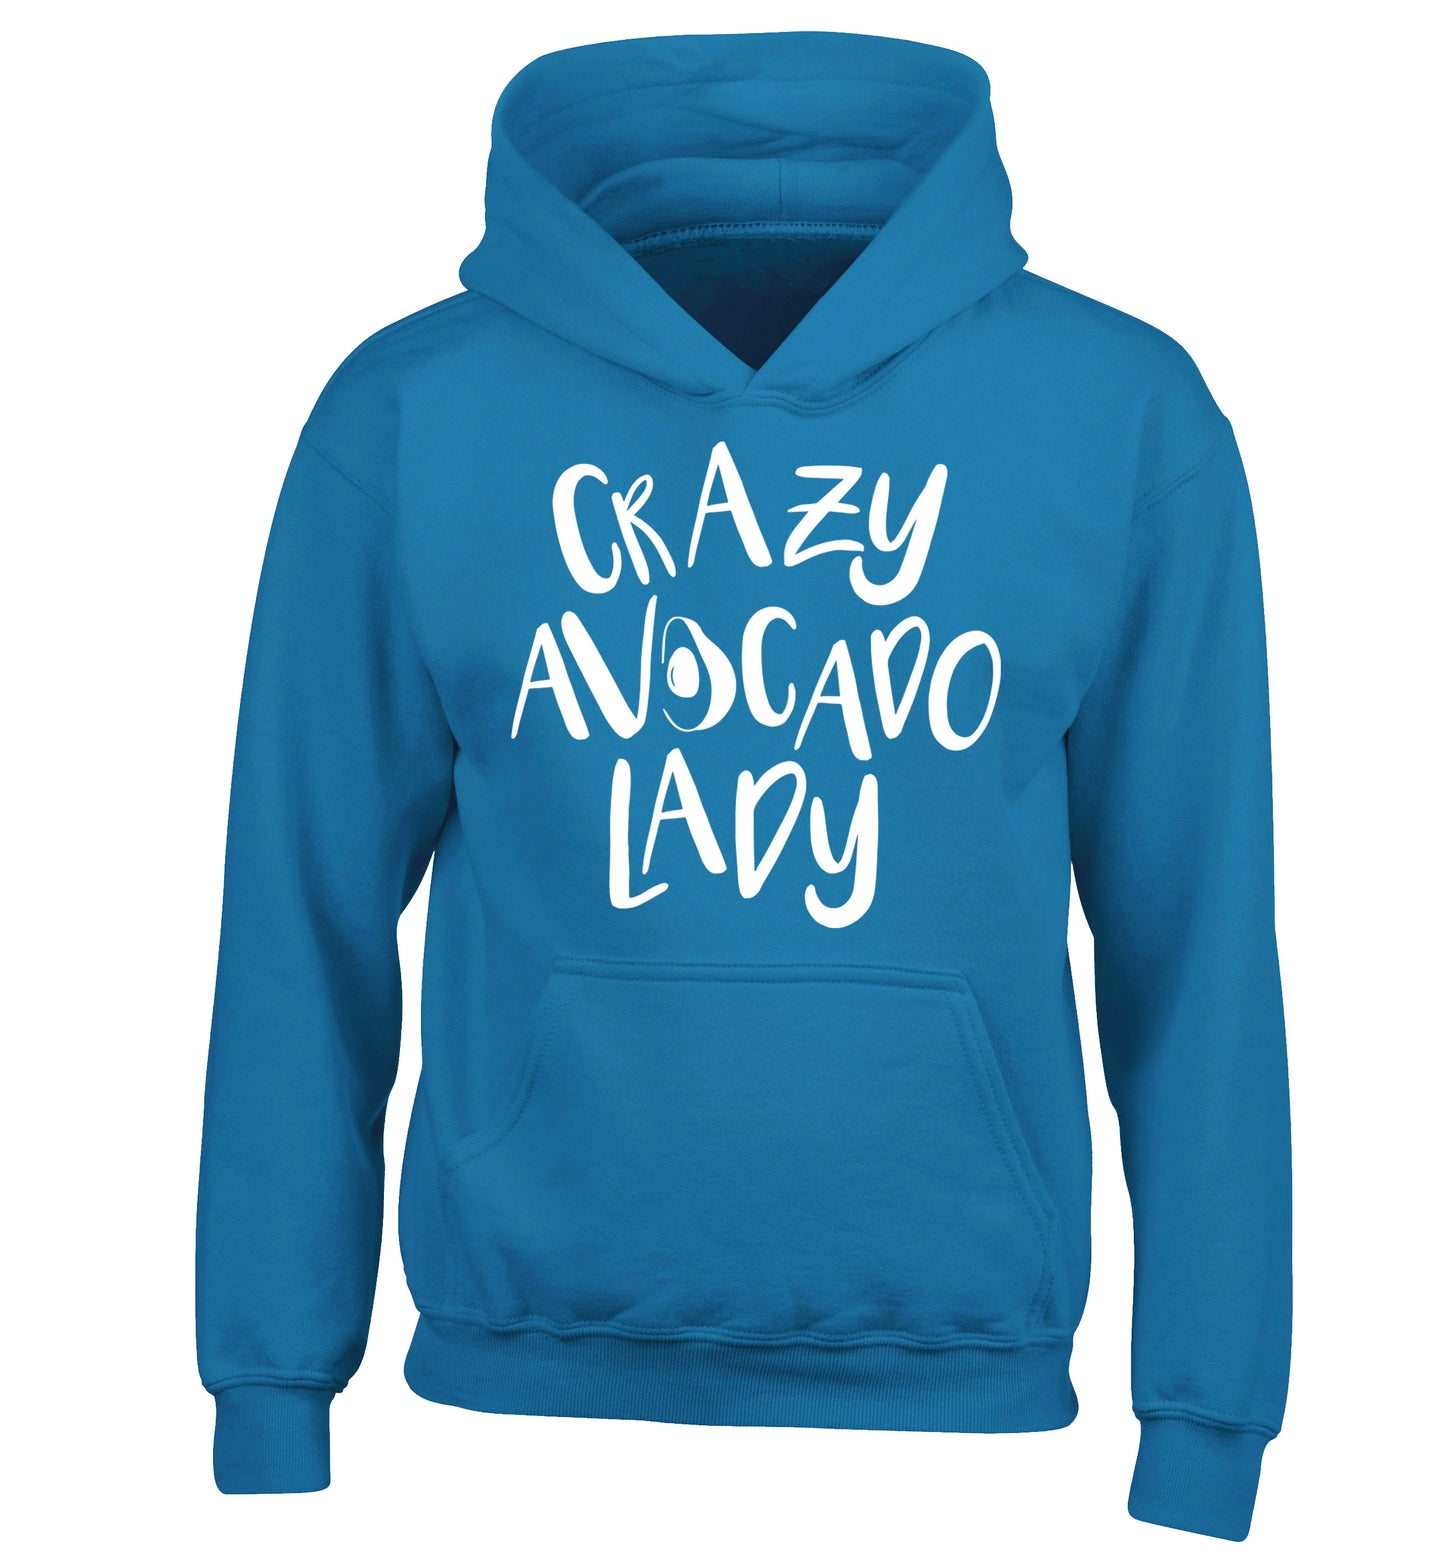 Crazy avocado lady children's blue hoodie 12-14 Years